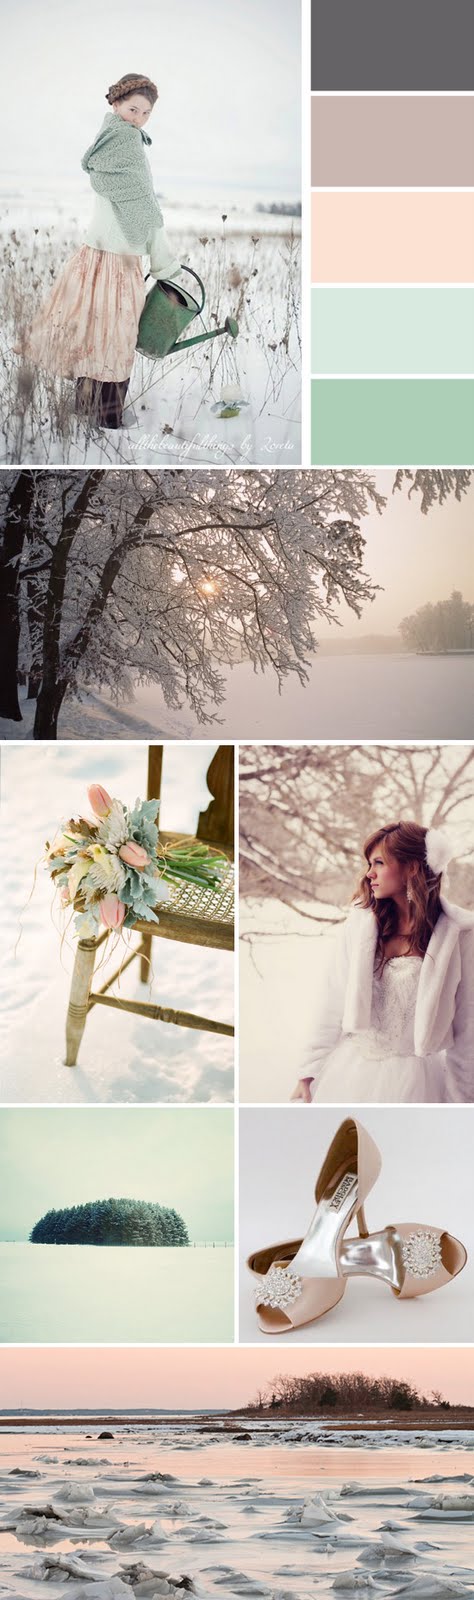 Winter wedding color story